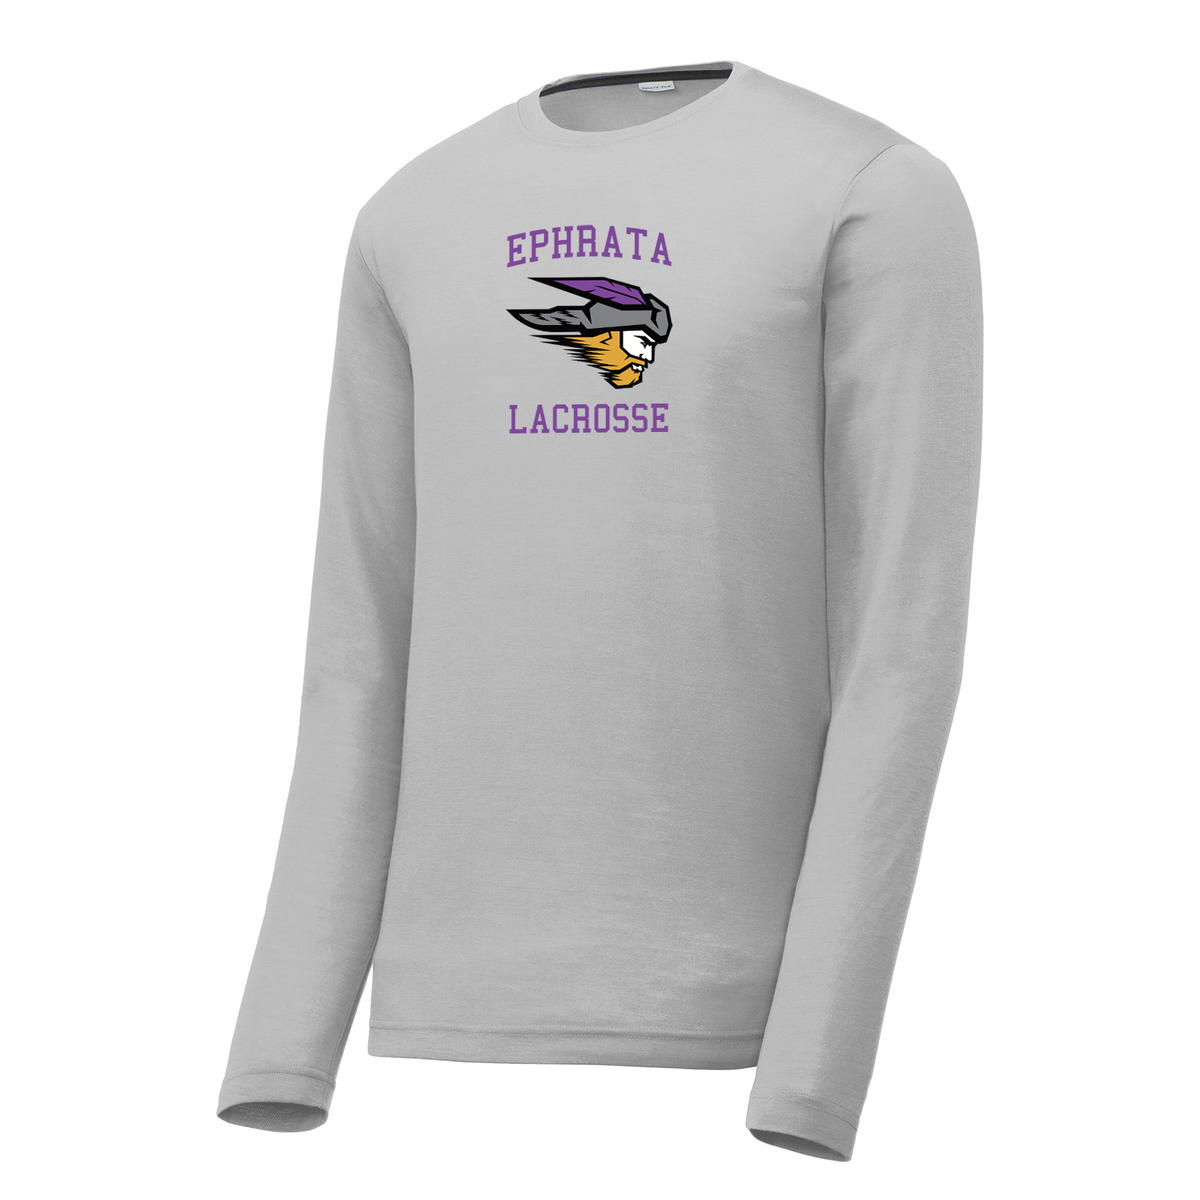 Ephrata Lacrosse Long Sleeve CottonTouch Performance Shirt